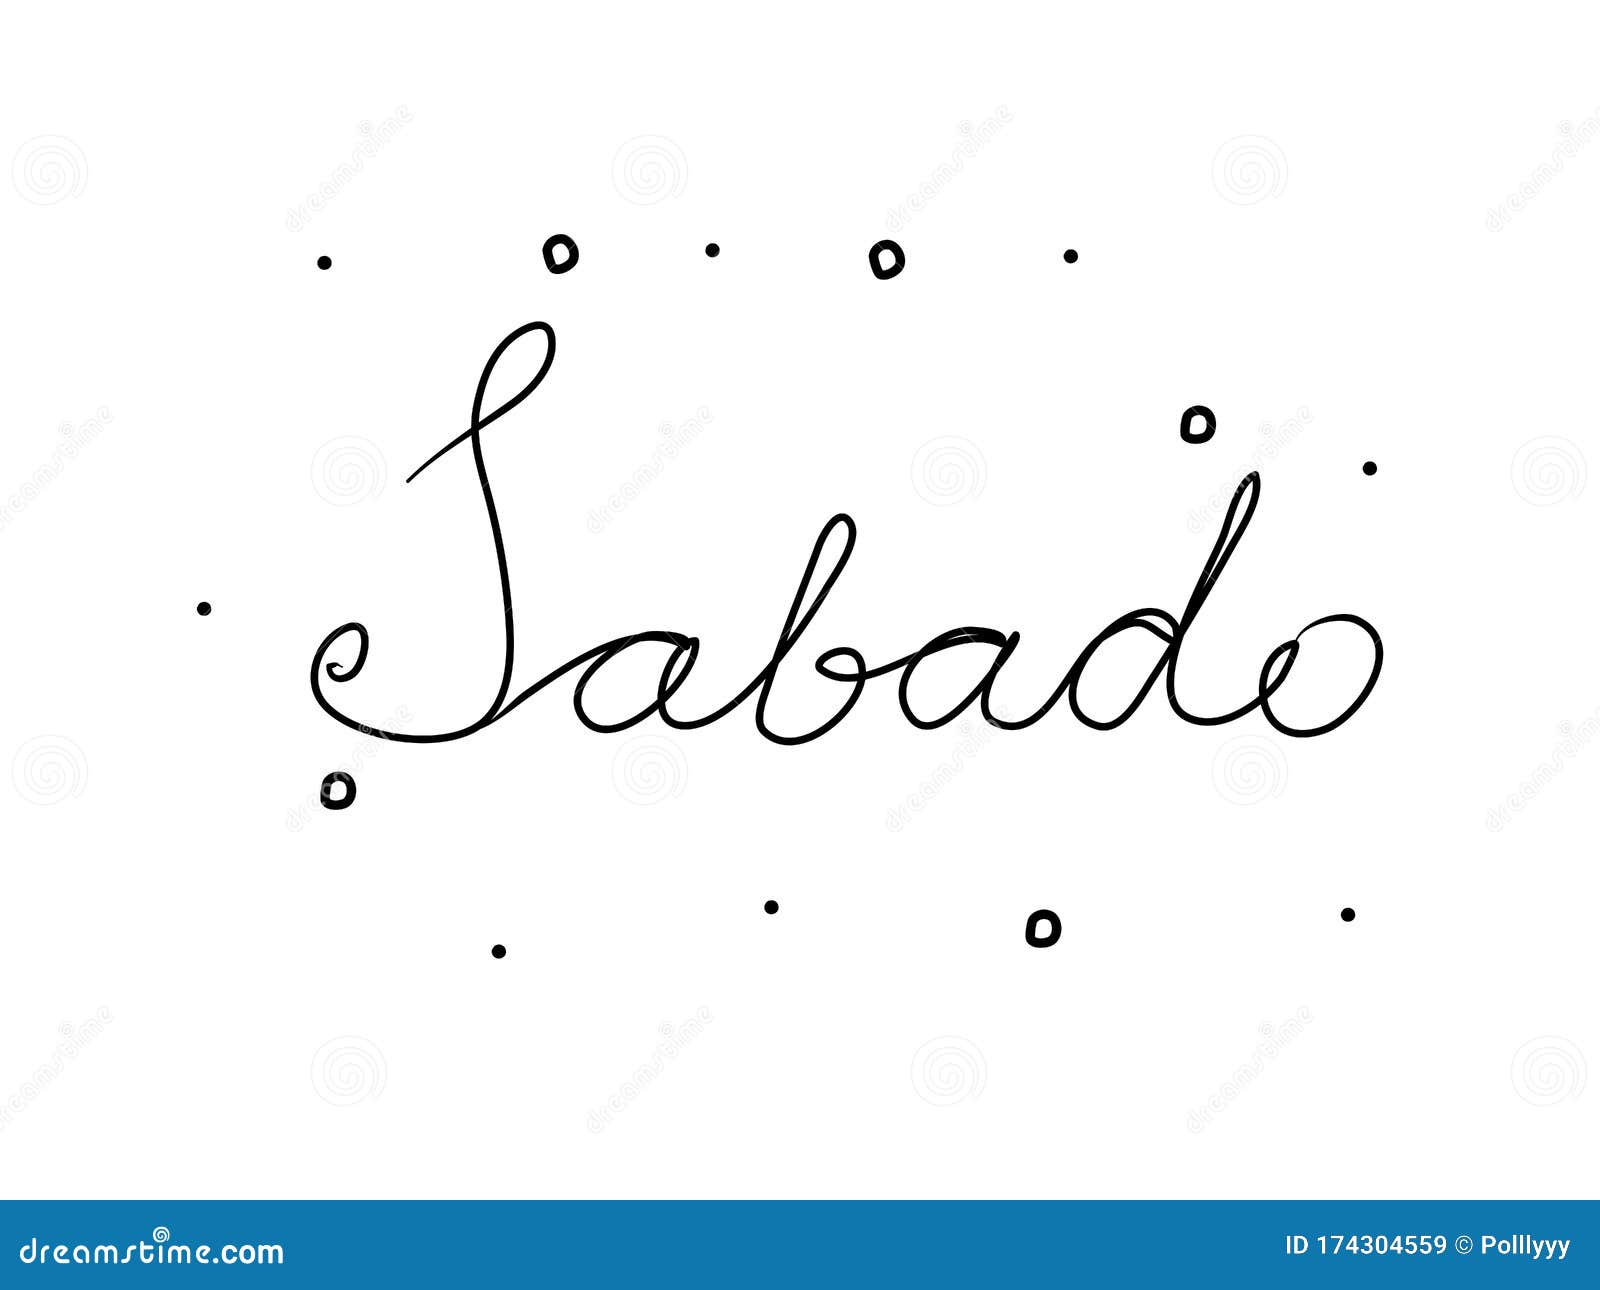 sabado phrase handwritten with a calligraphy brush. saturday in spanish. modern brush calligraphy.  word black